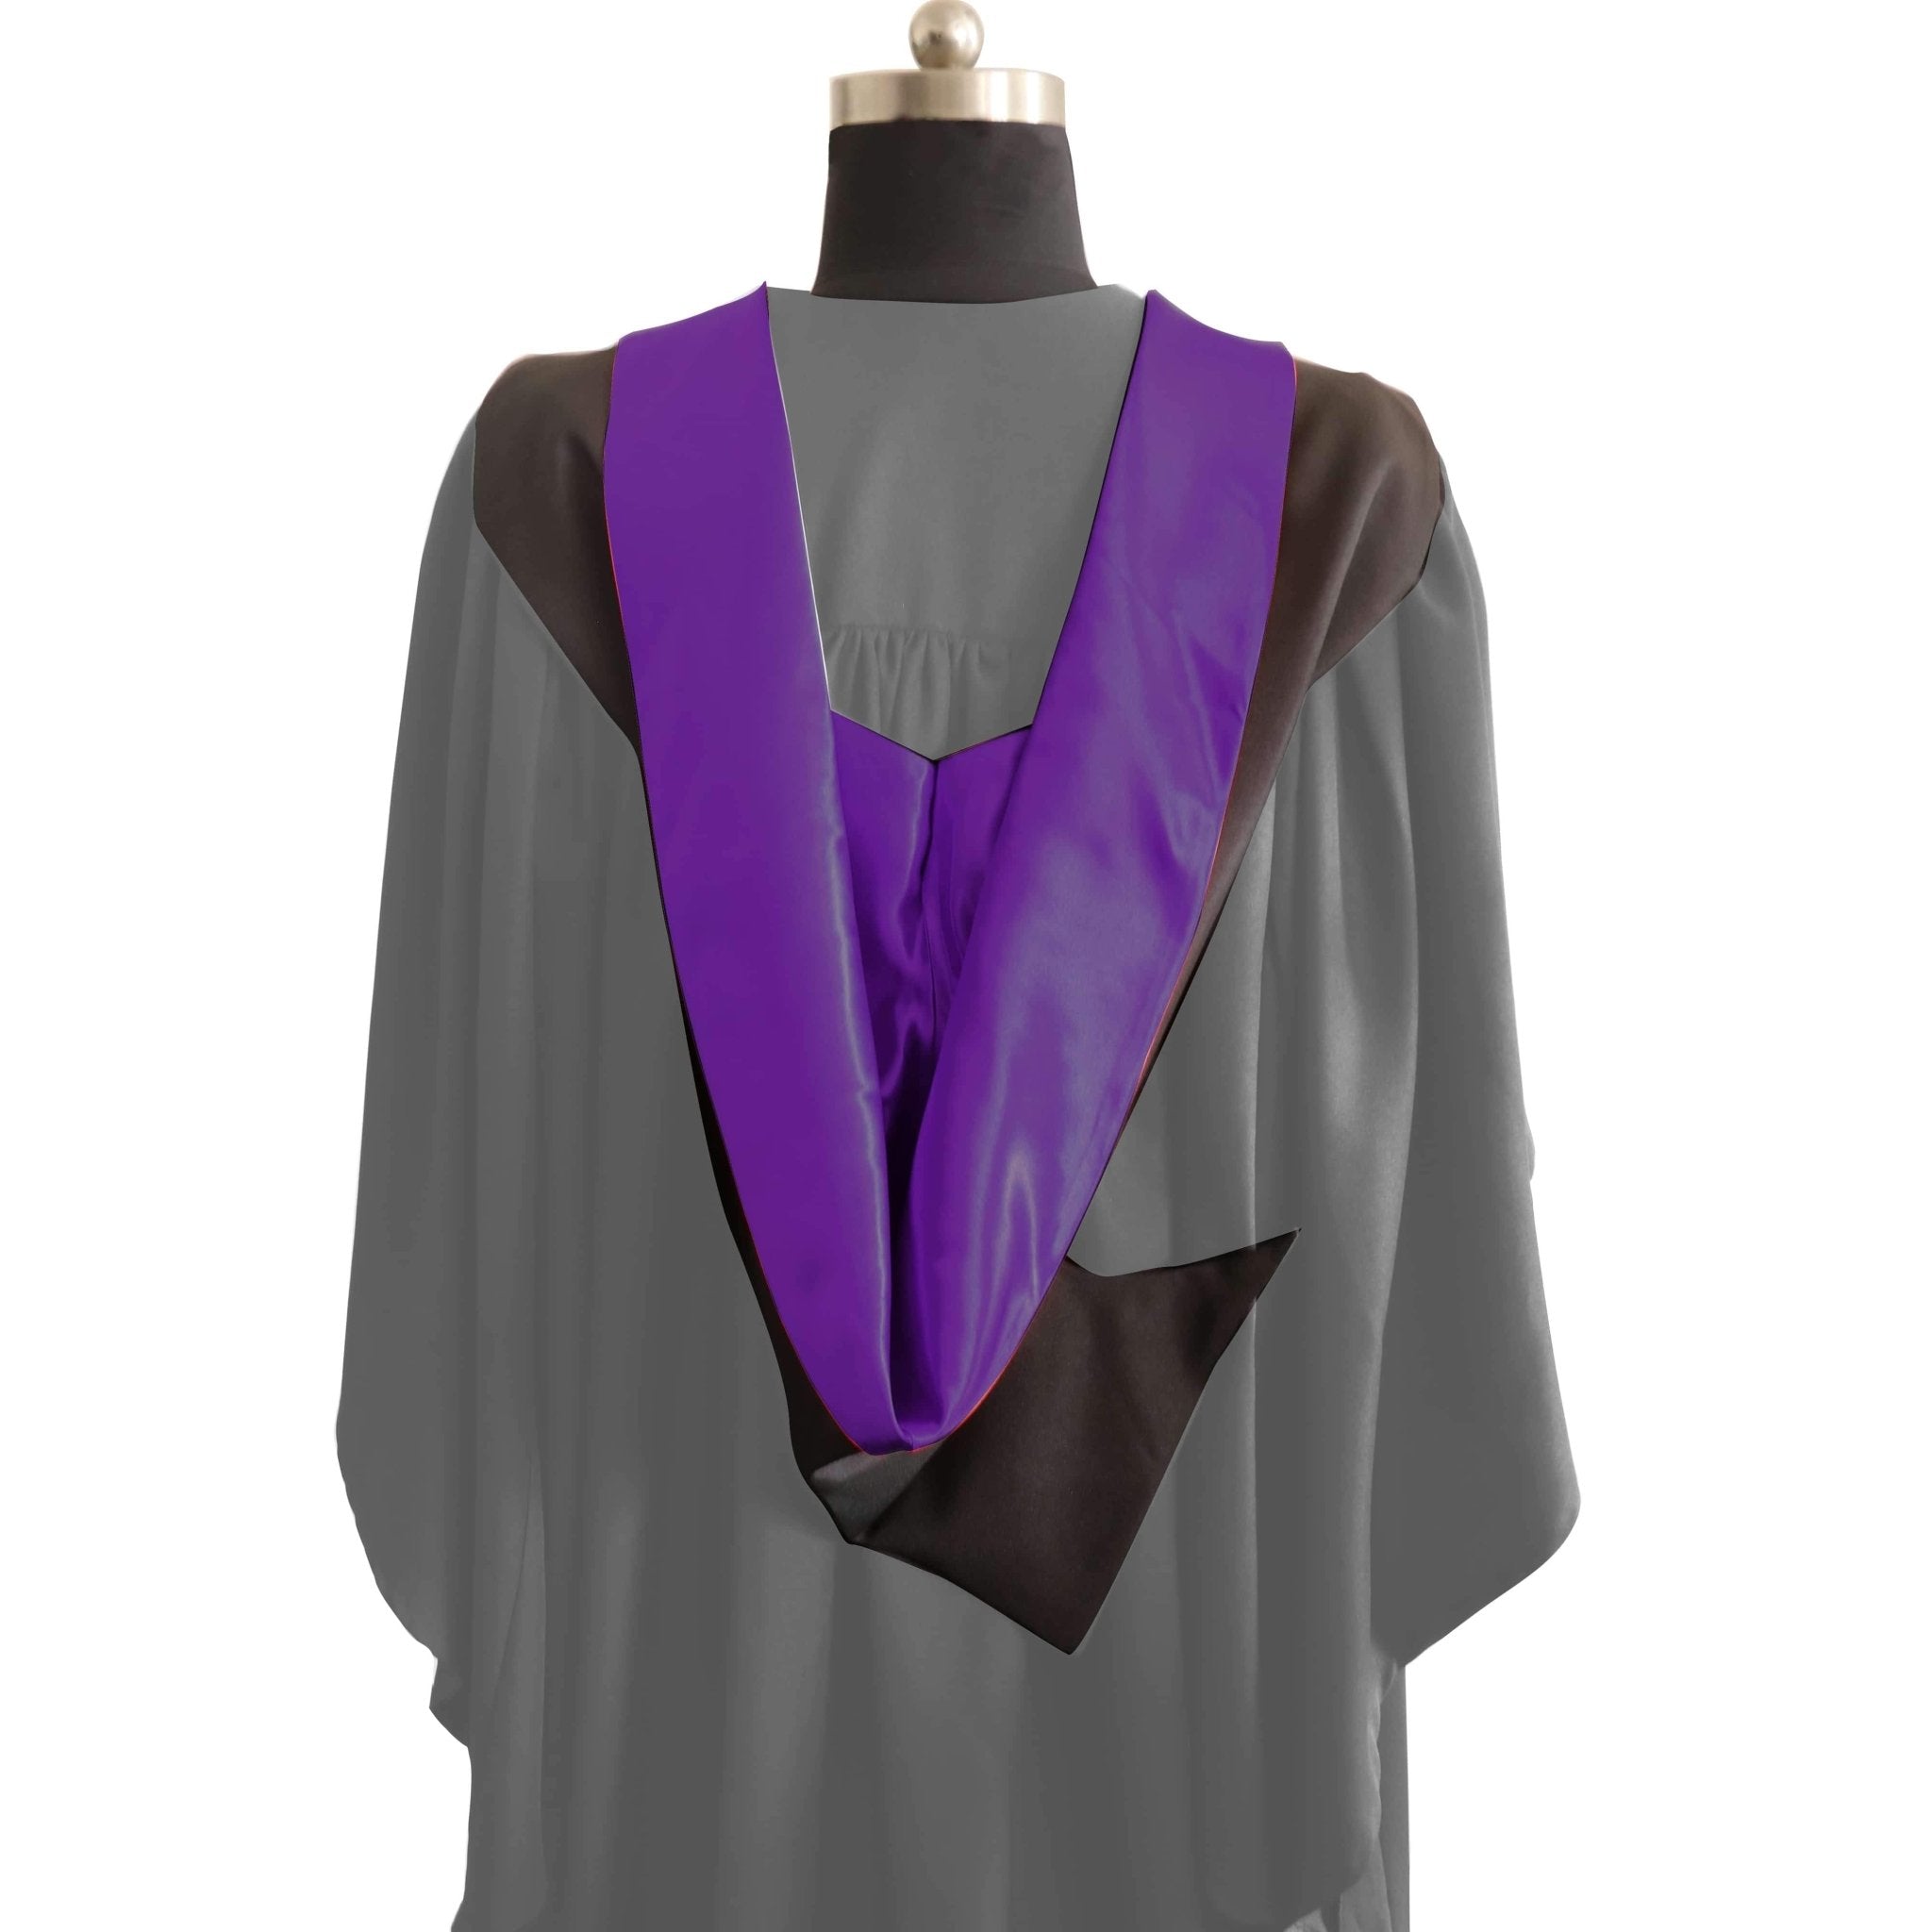 Simple Shape Burgon Academic Hood - Bachelor's Hood - Graduation Gowns UK